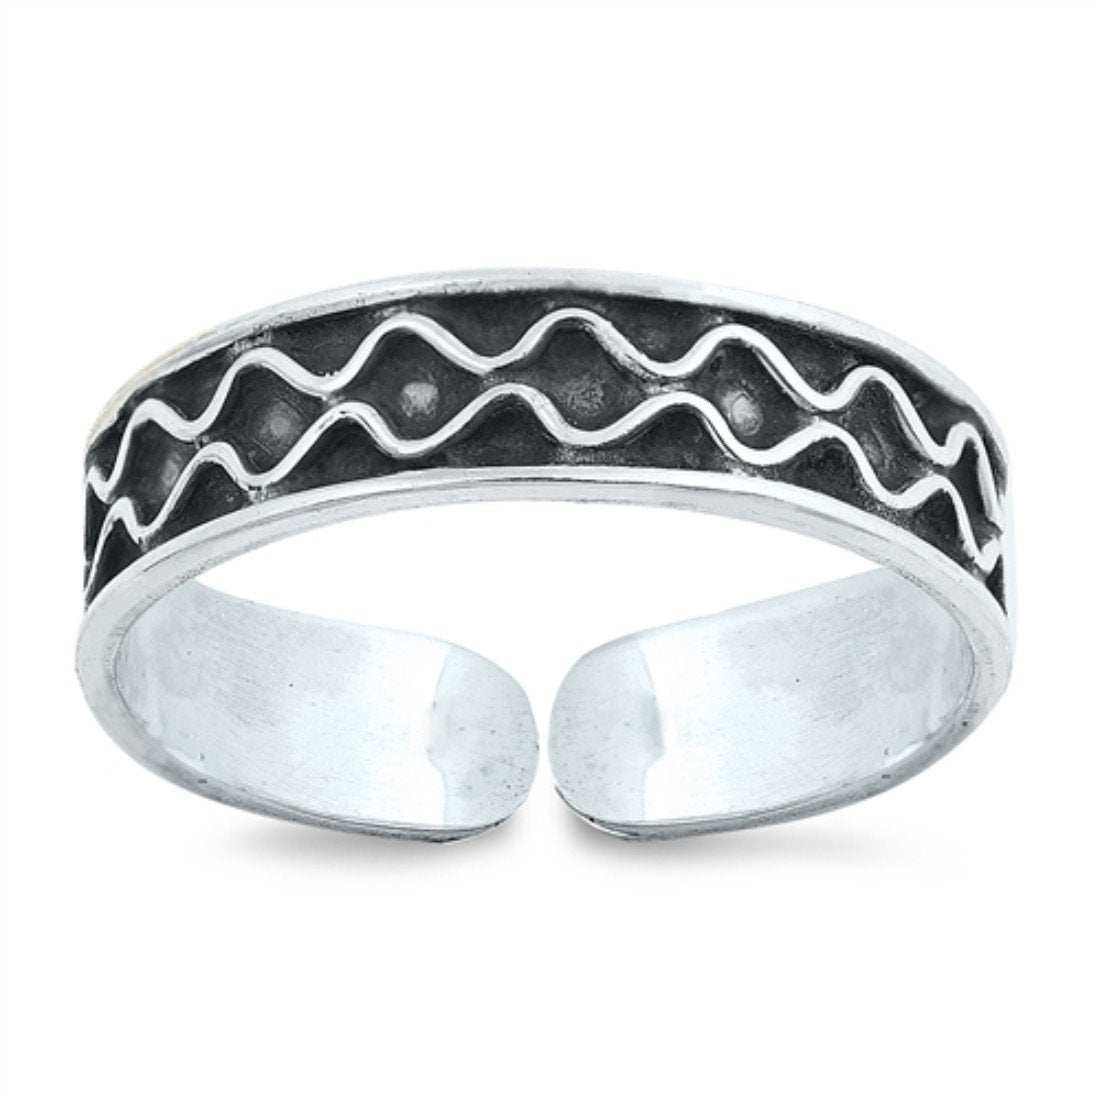 Bali Design Adjustable Silver Toe Ring Band 925 Sterling Silver (4mm)